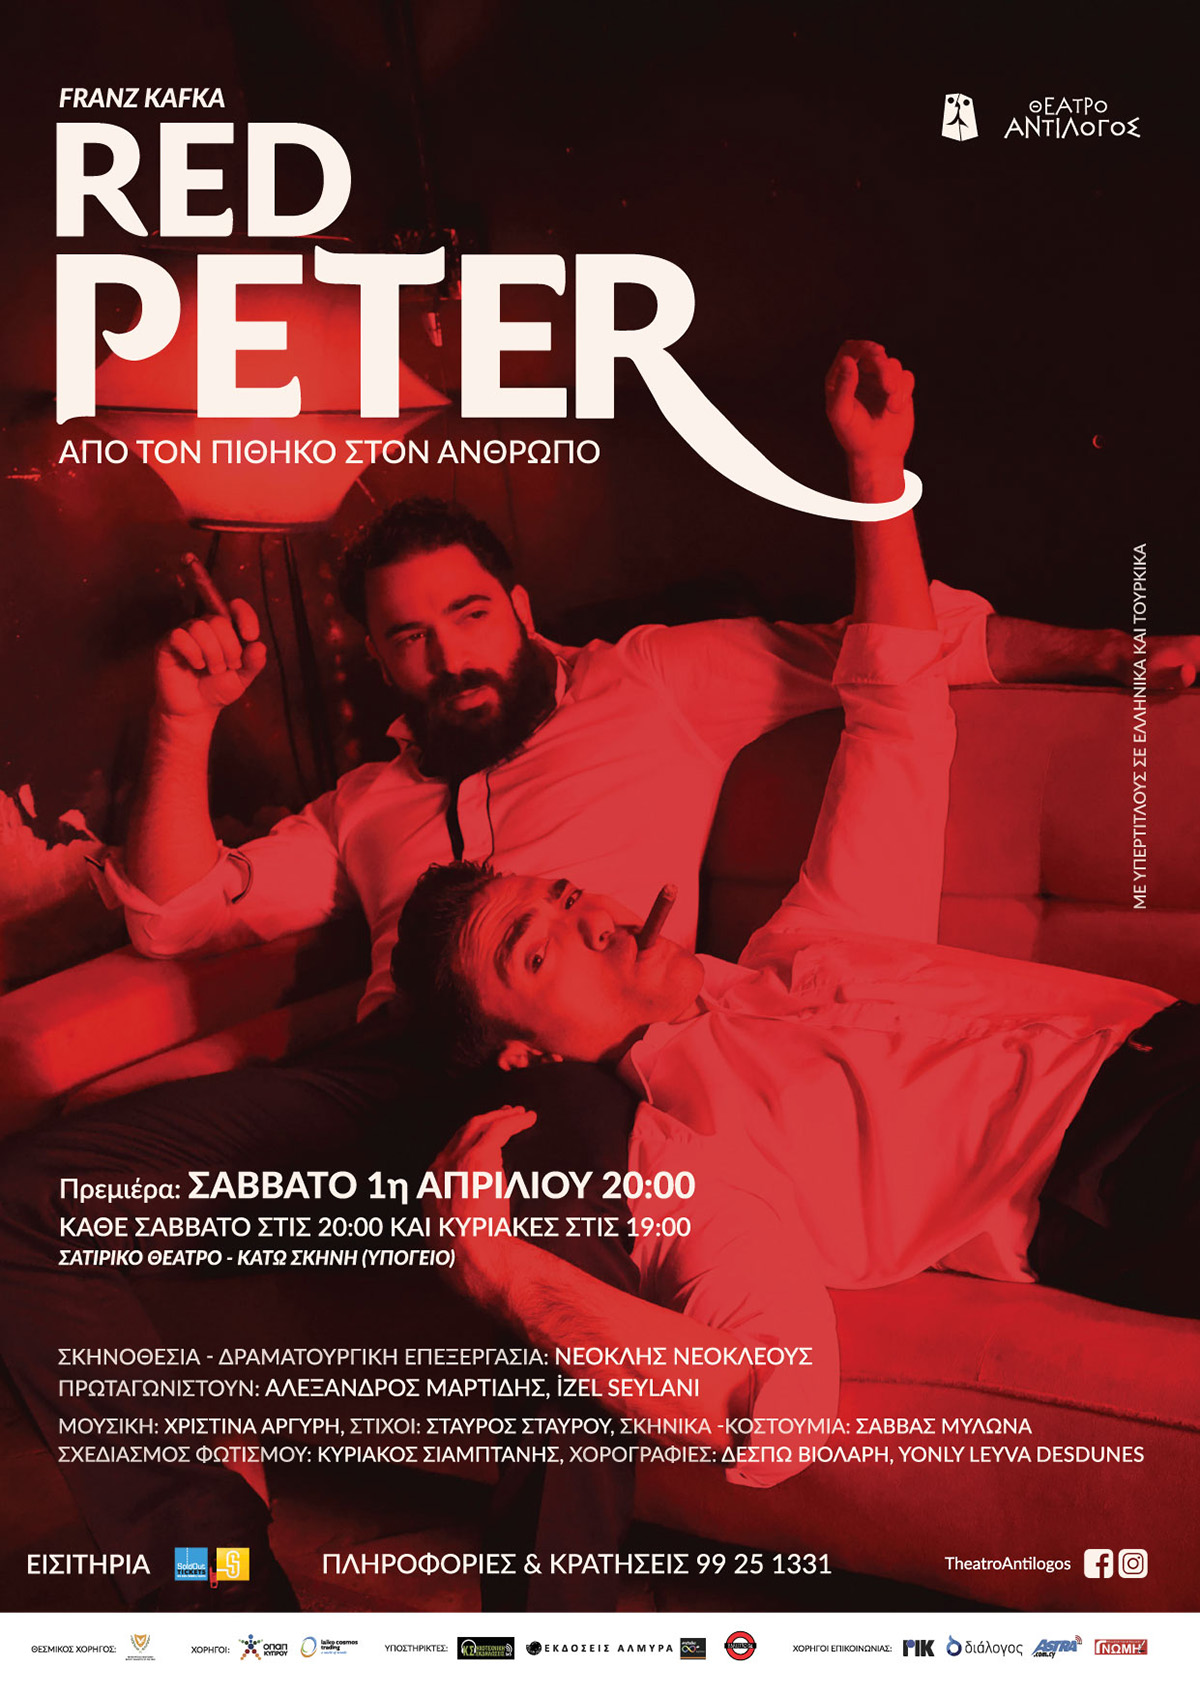 RED PETER Από τον πίθηκο στον Άνθρωπο/ Franz Kafka